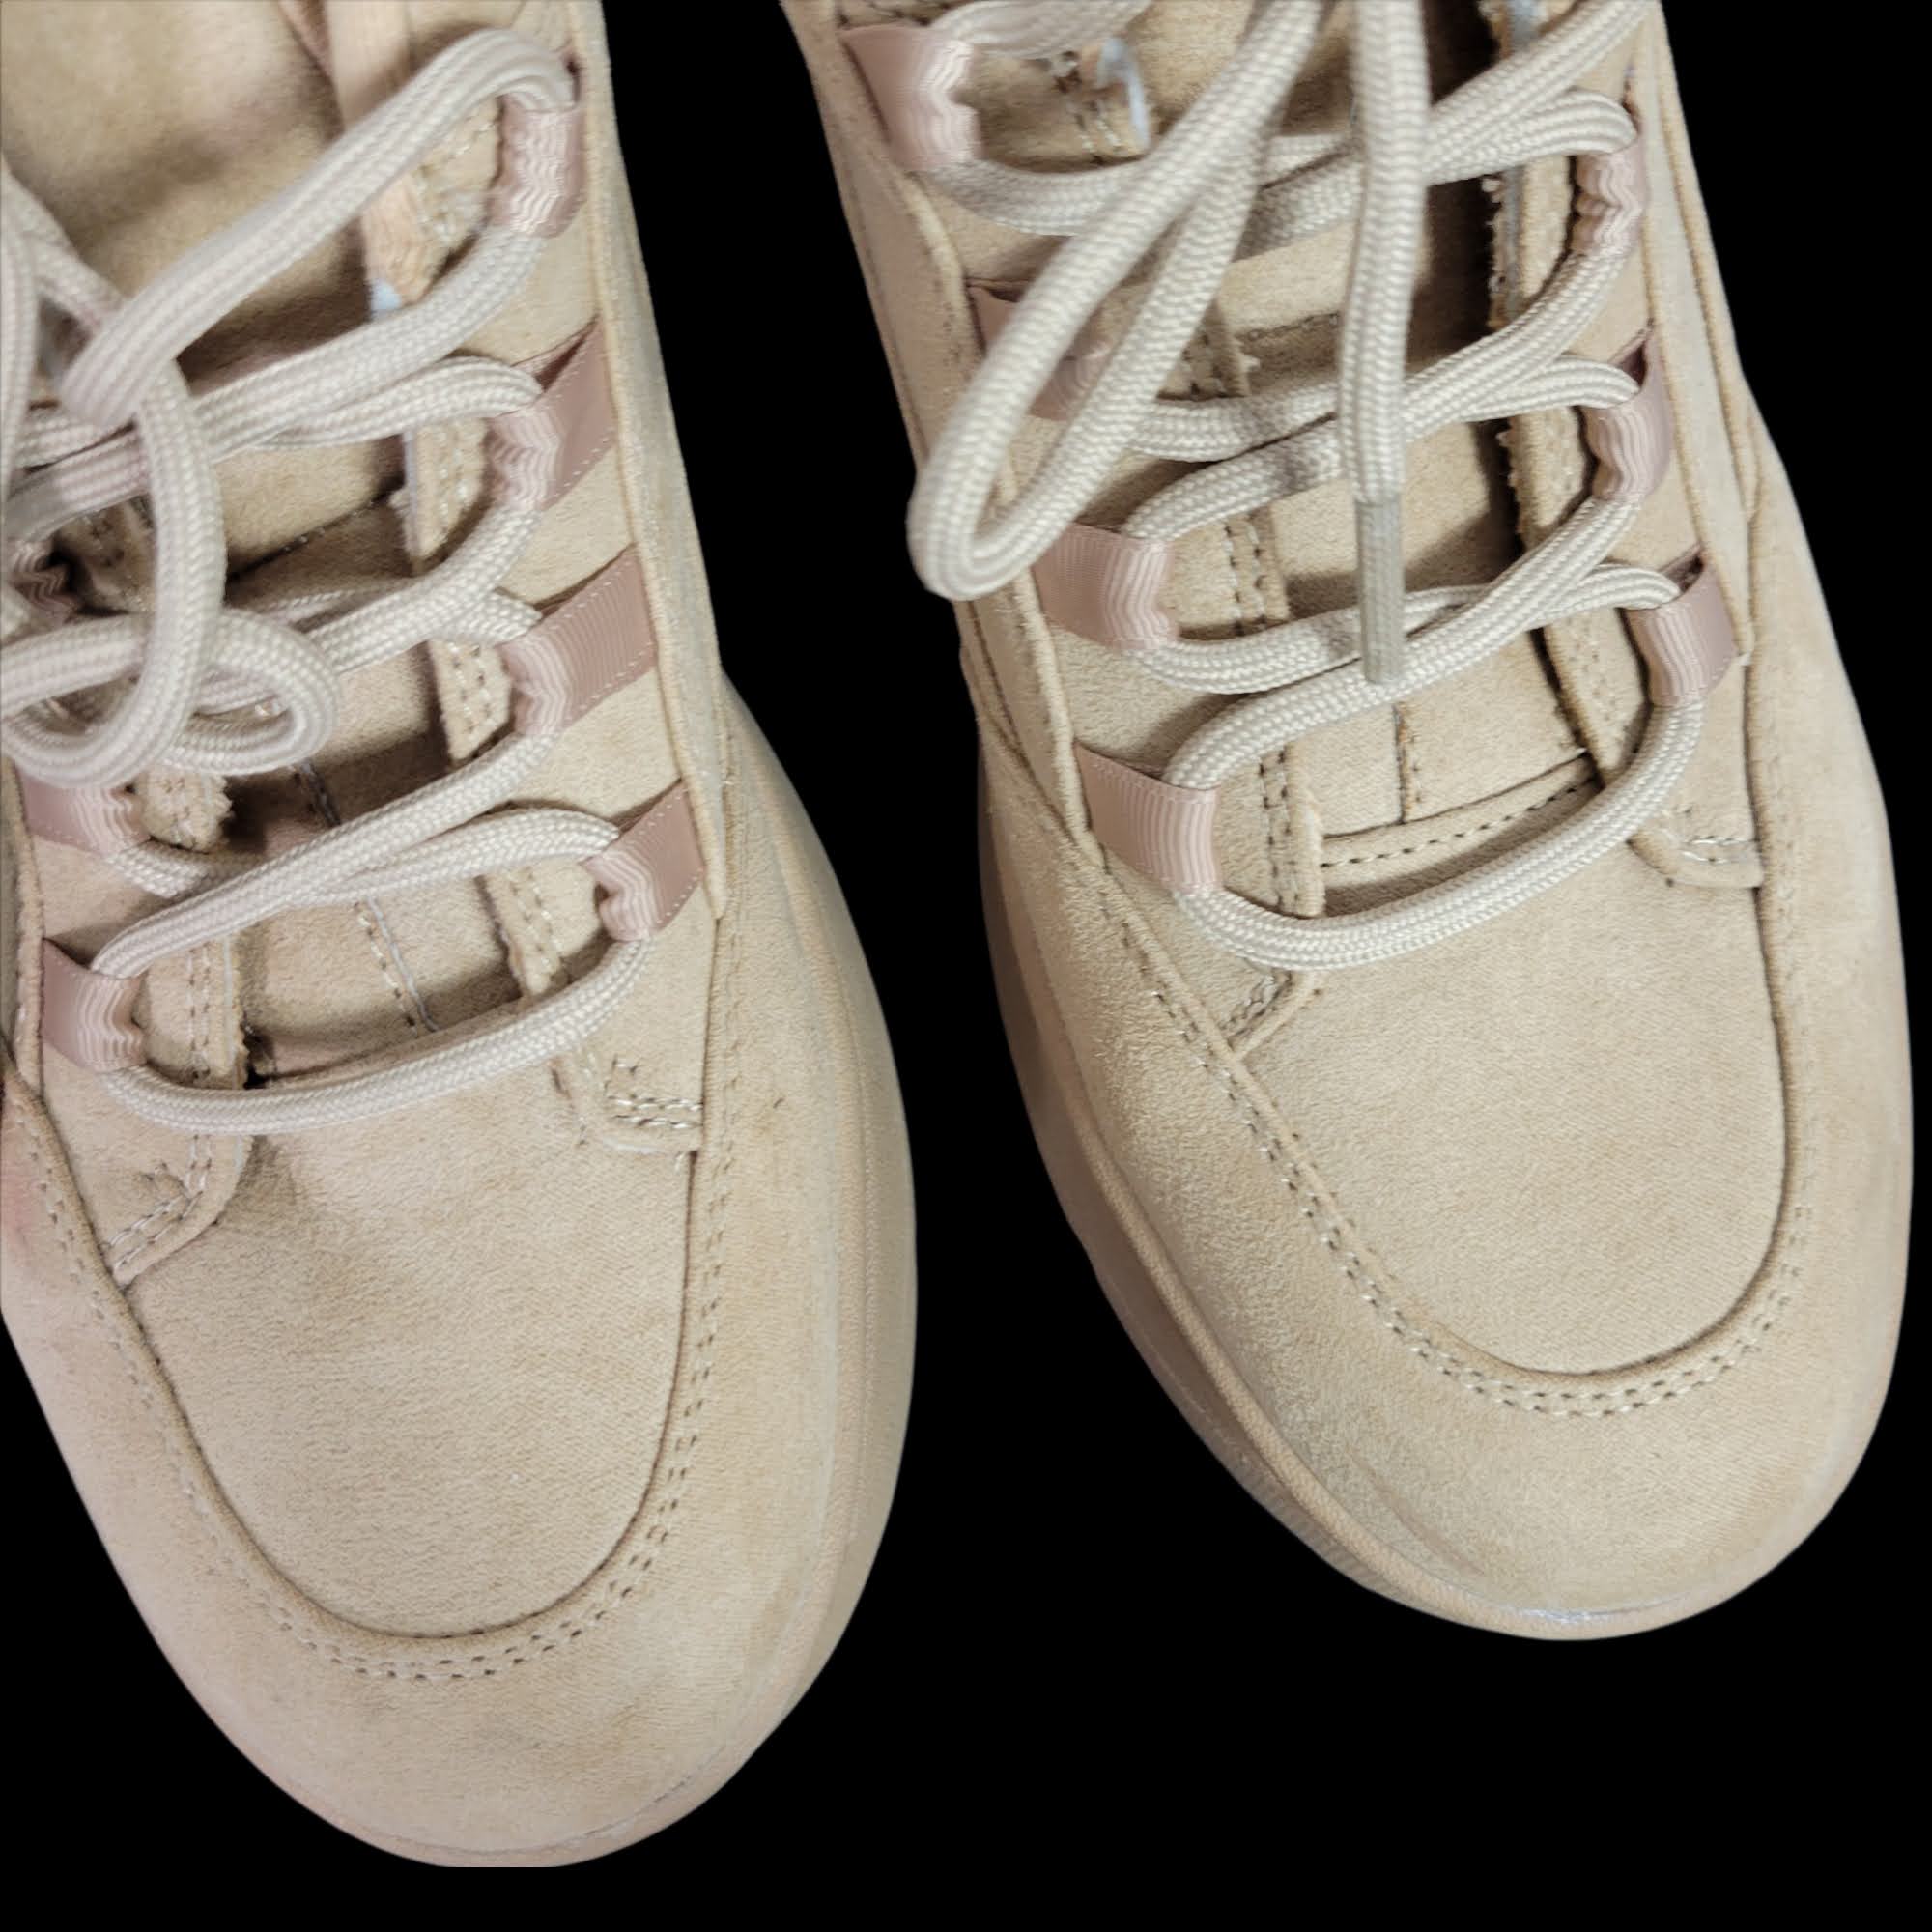 Steve Madden Bounce Platform Sneakers Size 8.5